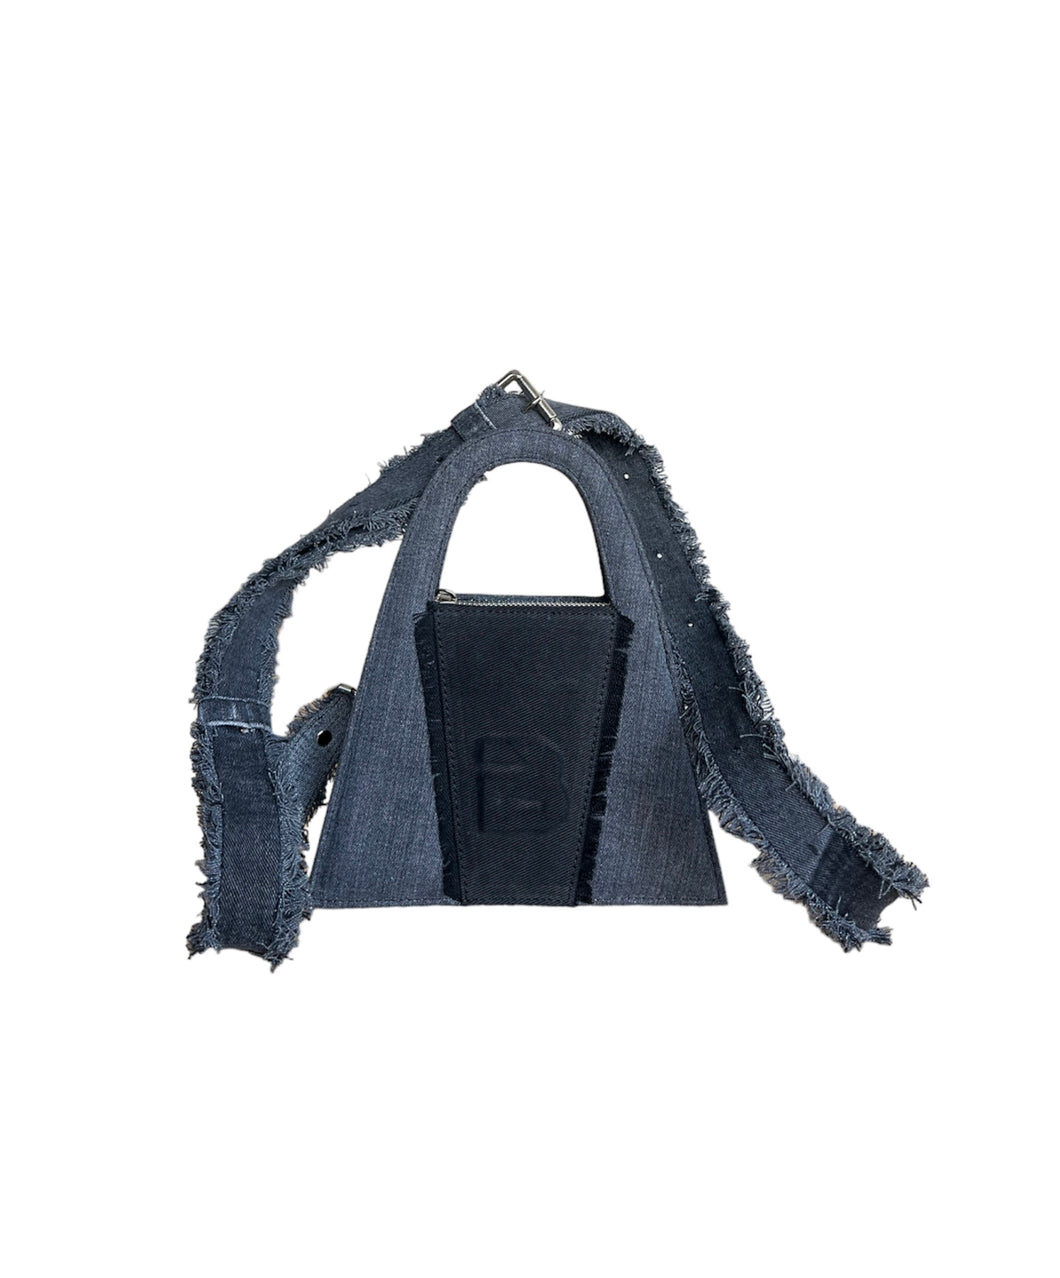 Black & Gray Recycled Denim Minnie Lock Bag